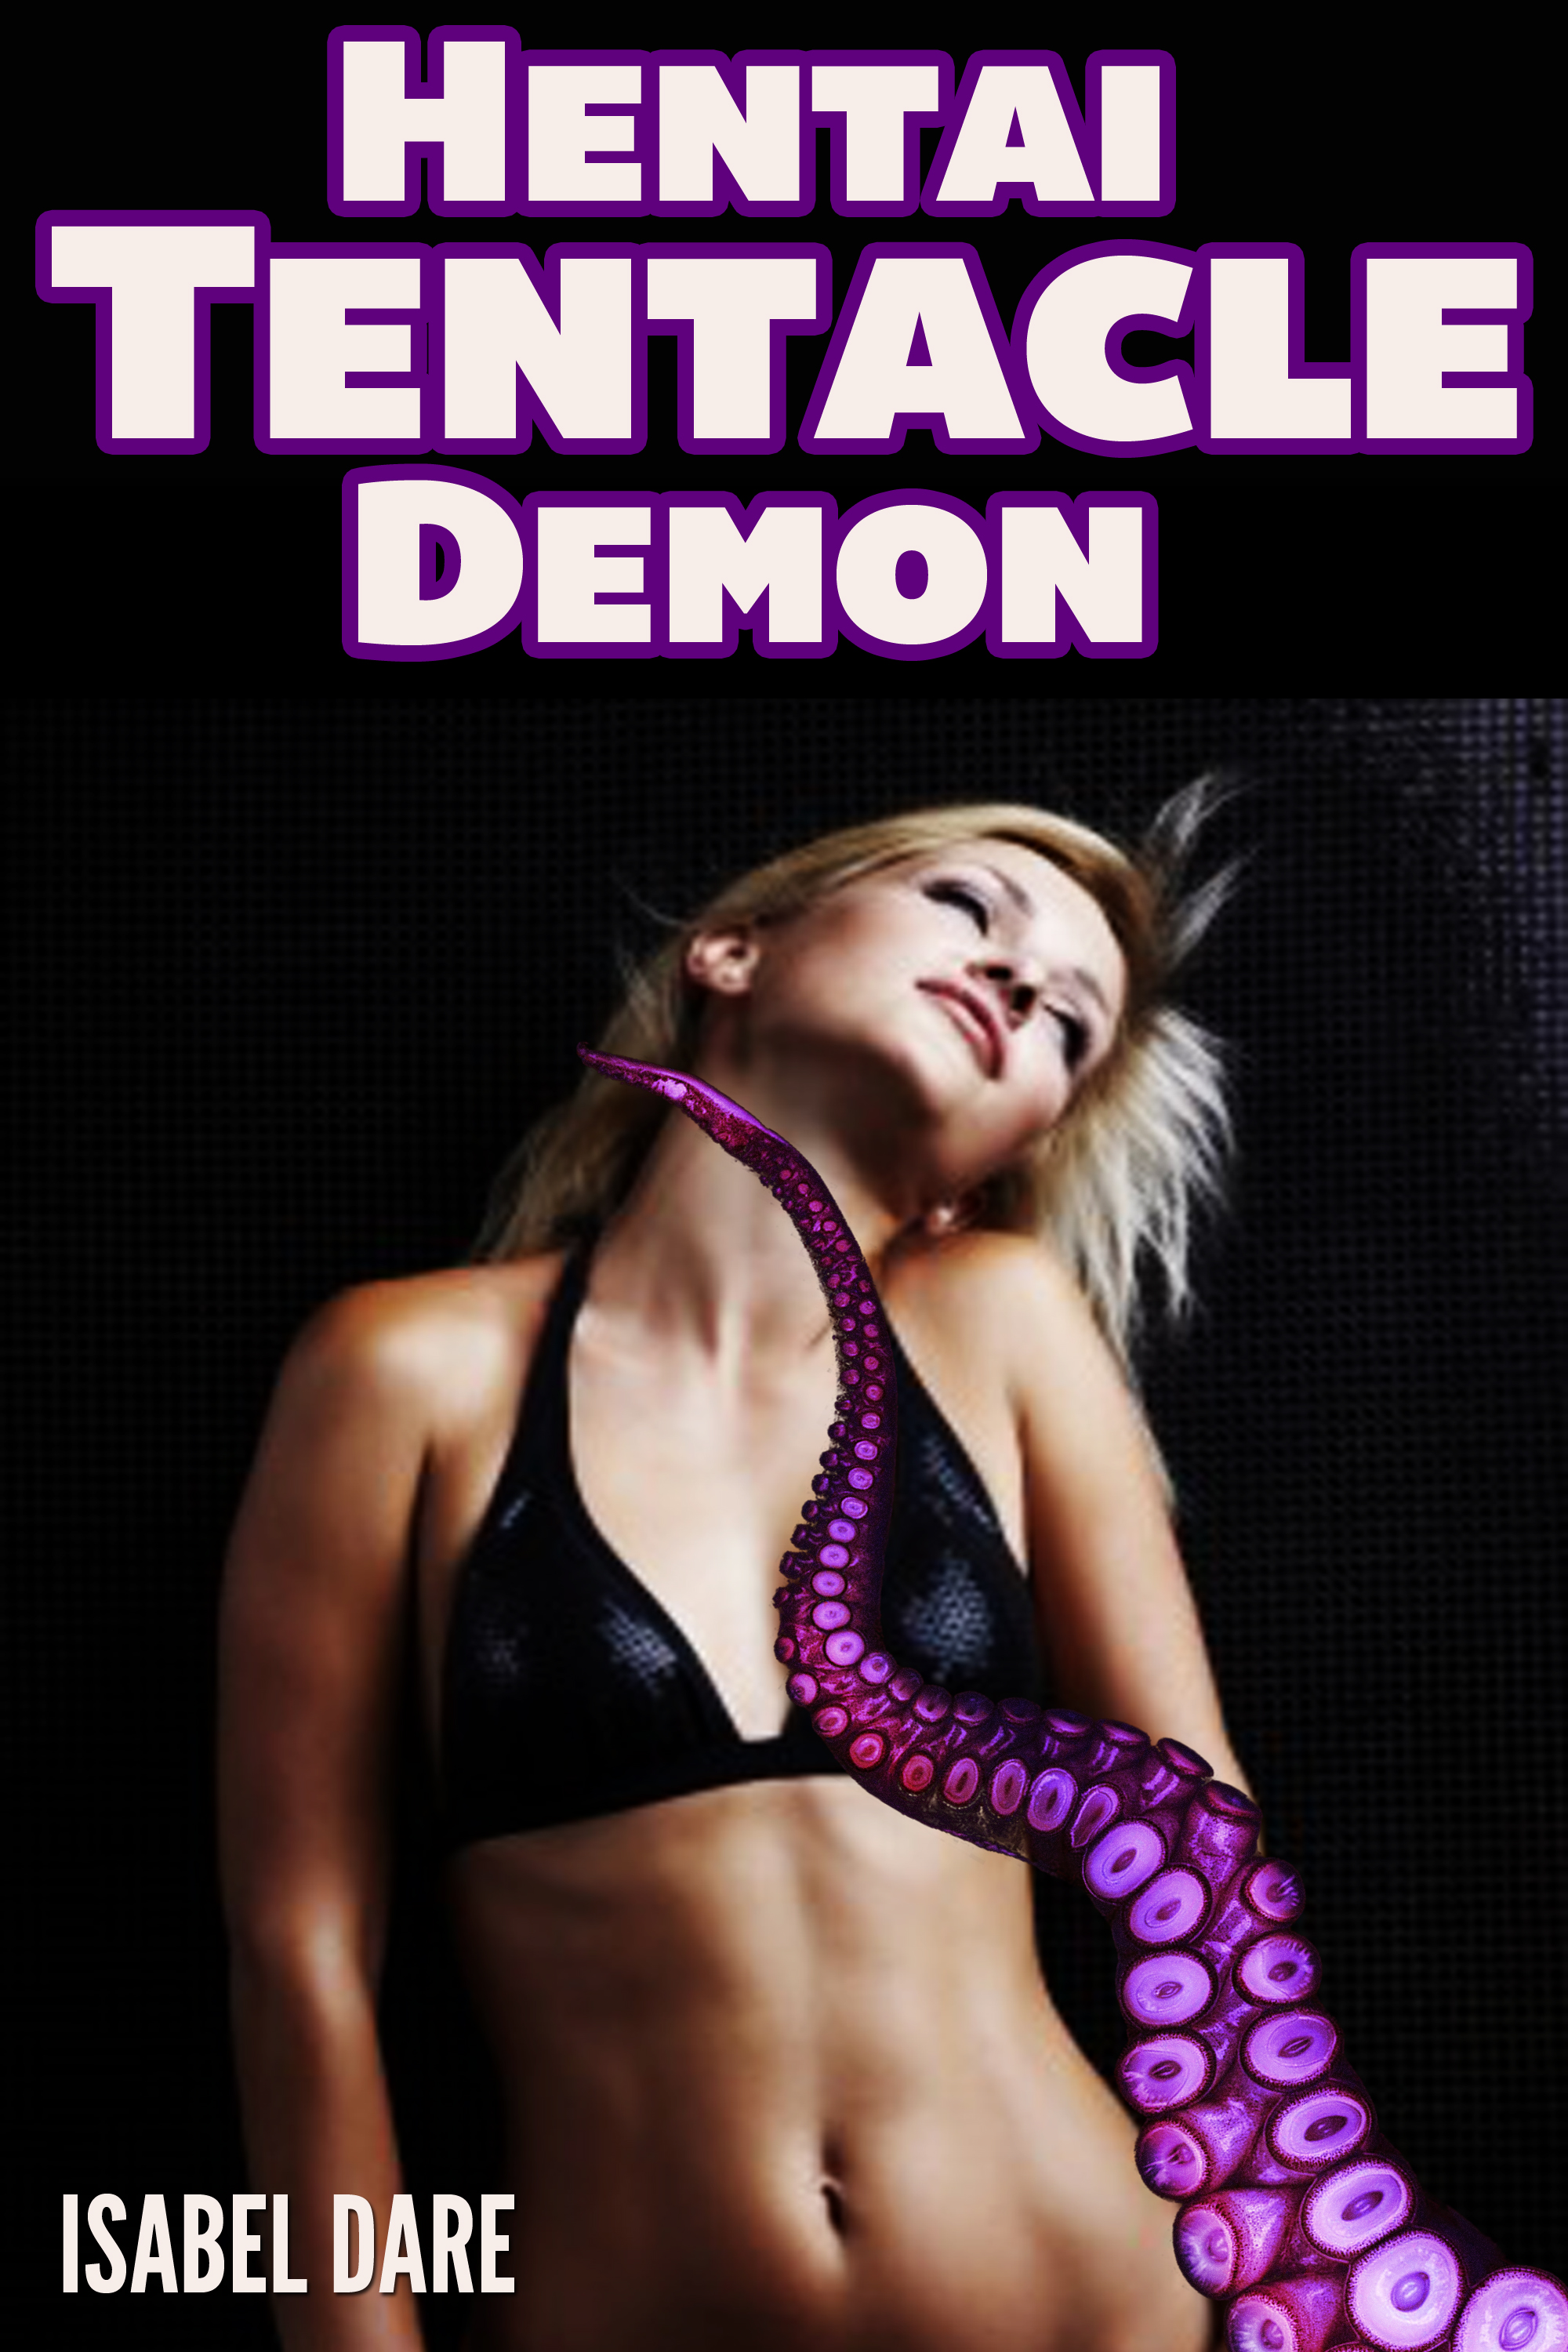 Demon Monster Hentai - Hentai Tentacle Demon (Tentacle Monster Erotica), an Ebook by Isabel Dare